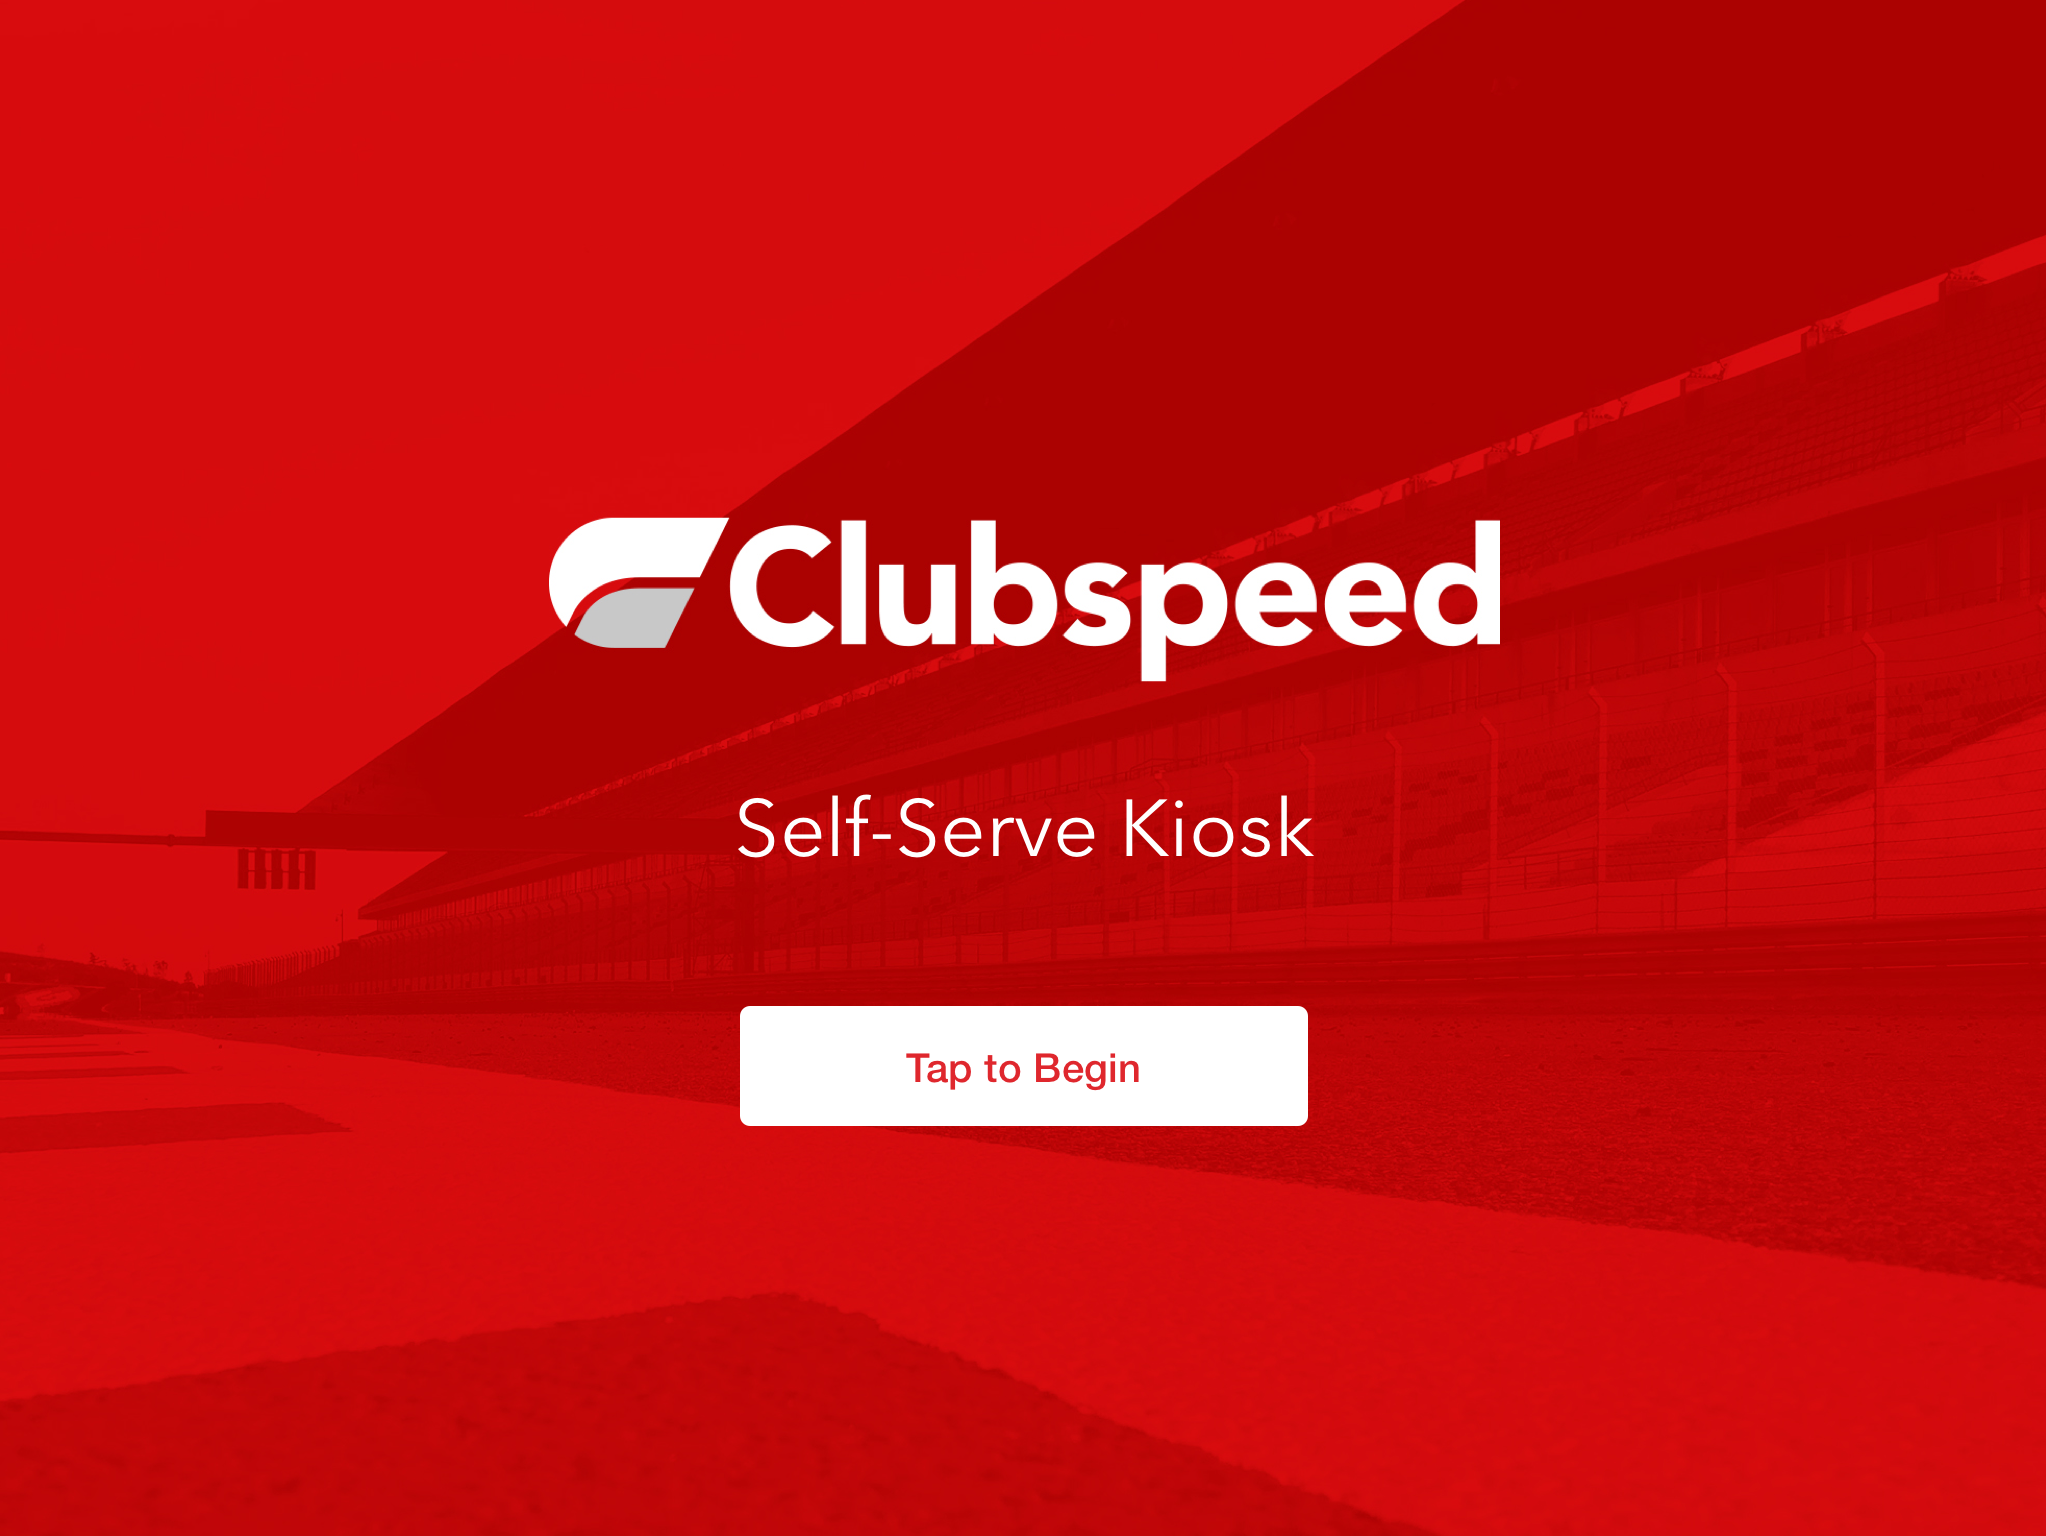 Clubspeed's Self-Service Kiosk